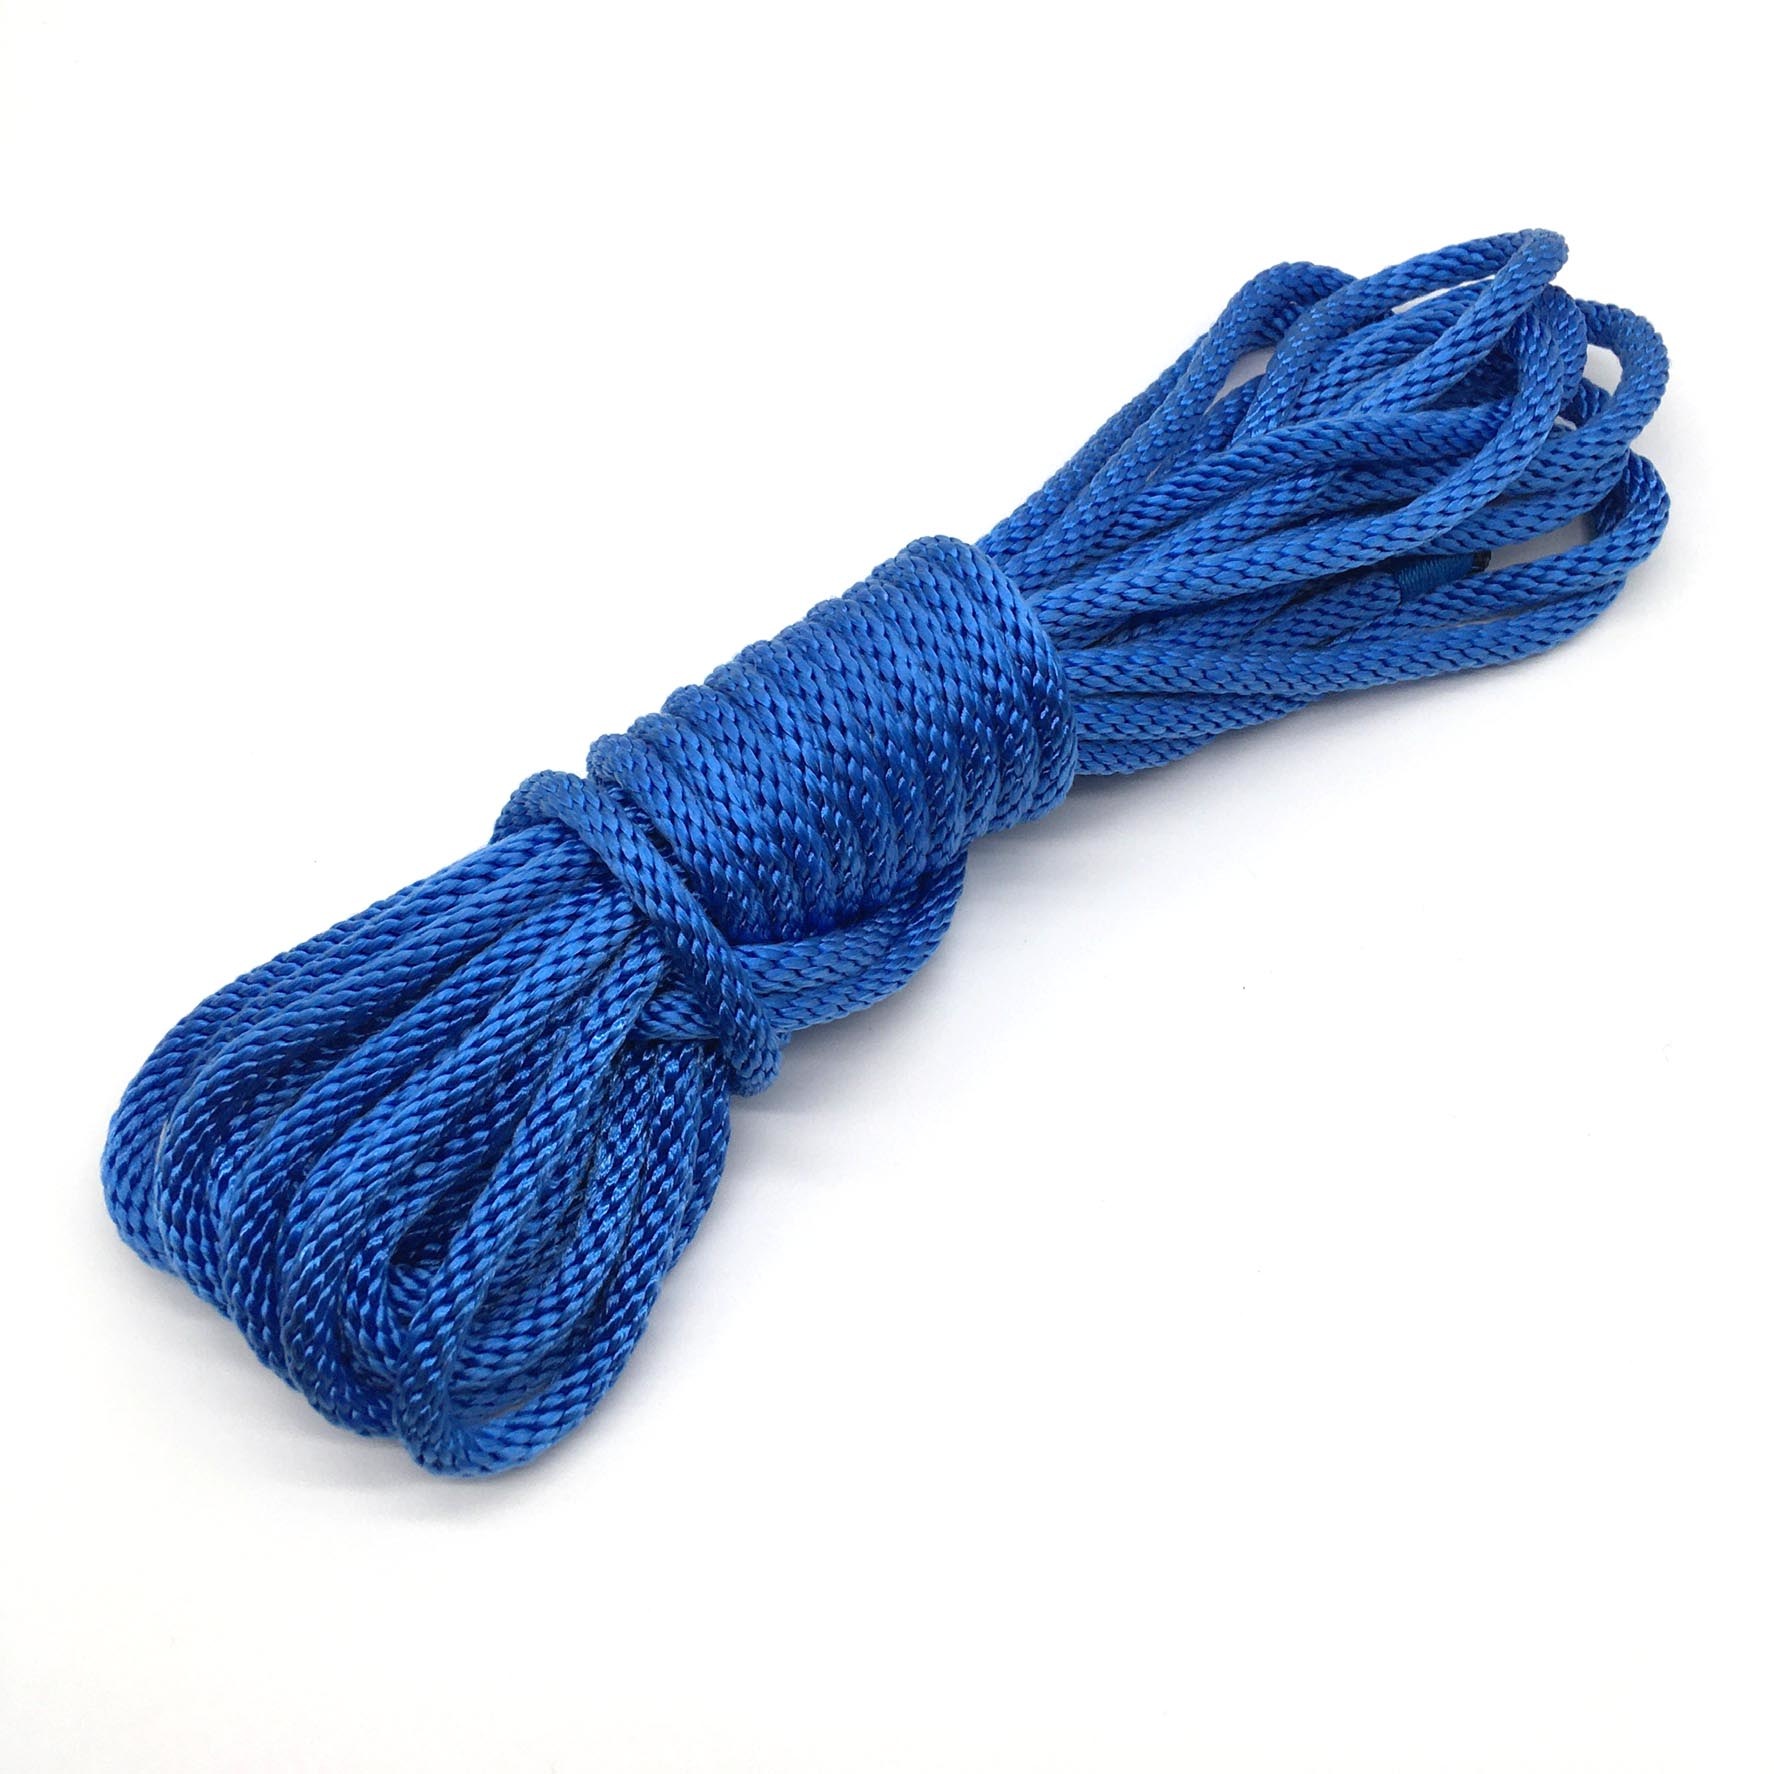 https://cdn.shoplightspeed.com/shops/606467/files/24660235/venus-rope-1-4-inch-solid-braid-nylon-rope.jpg